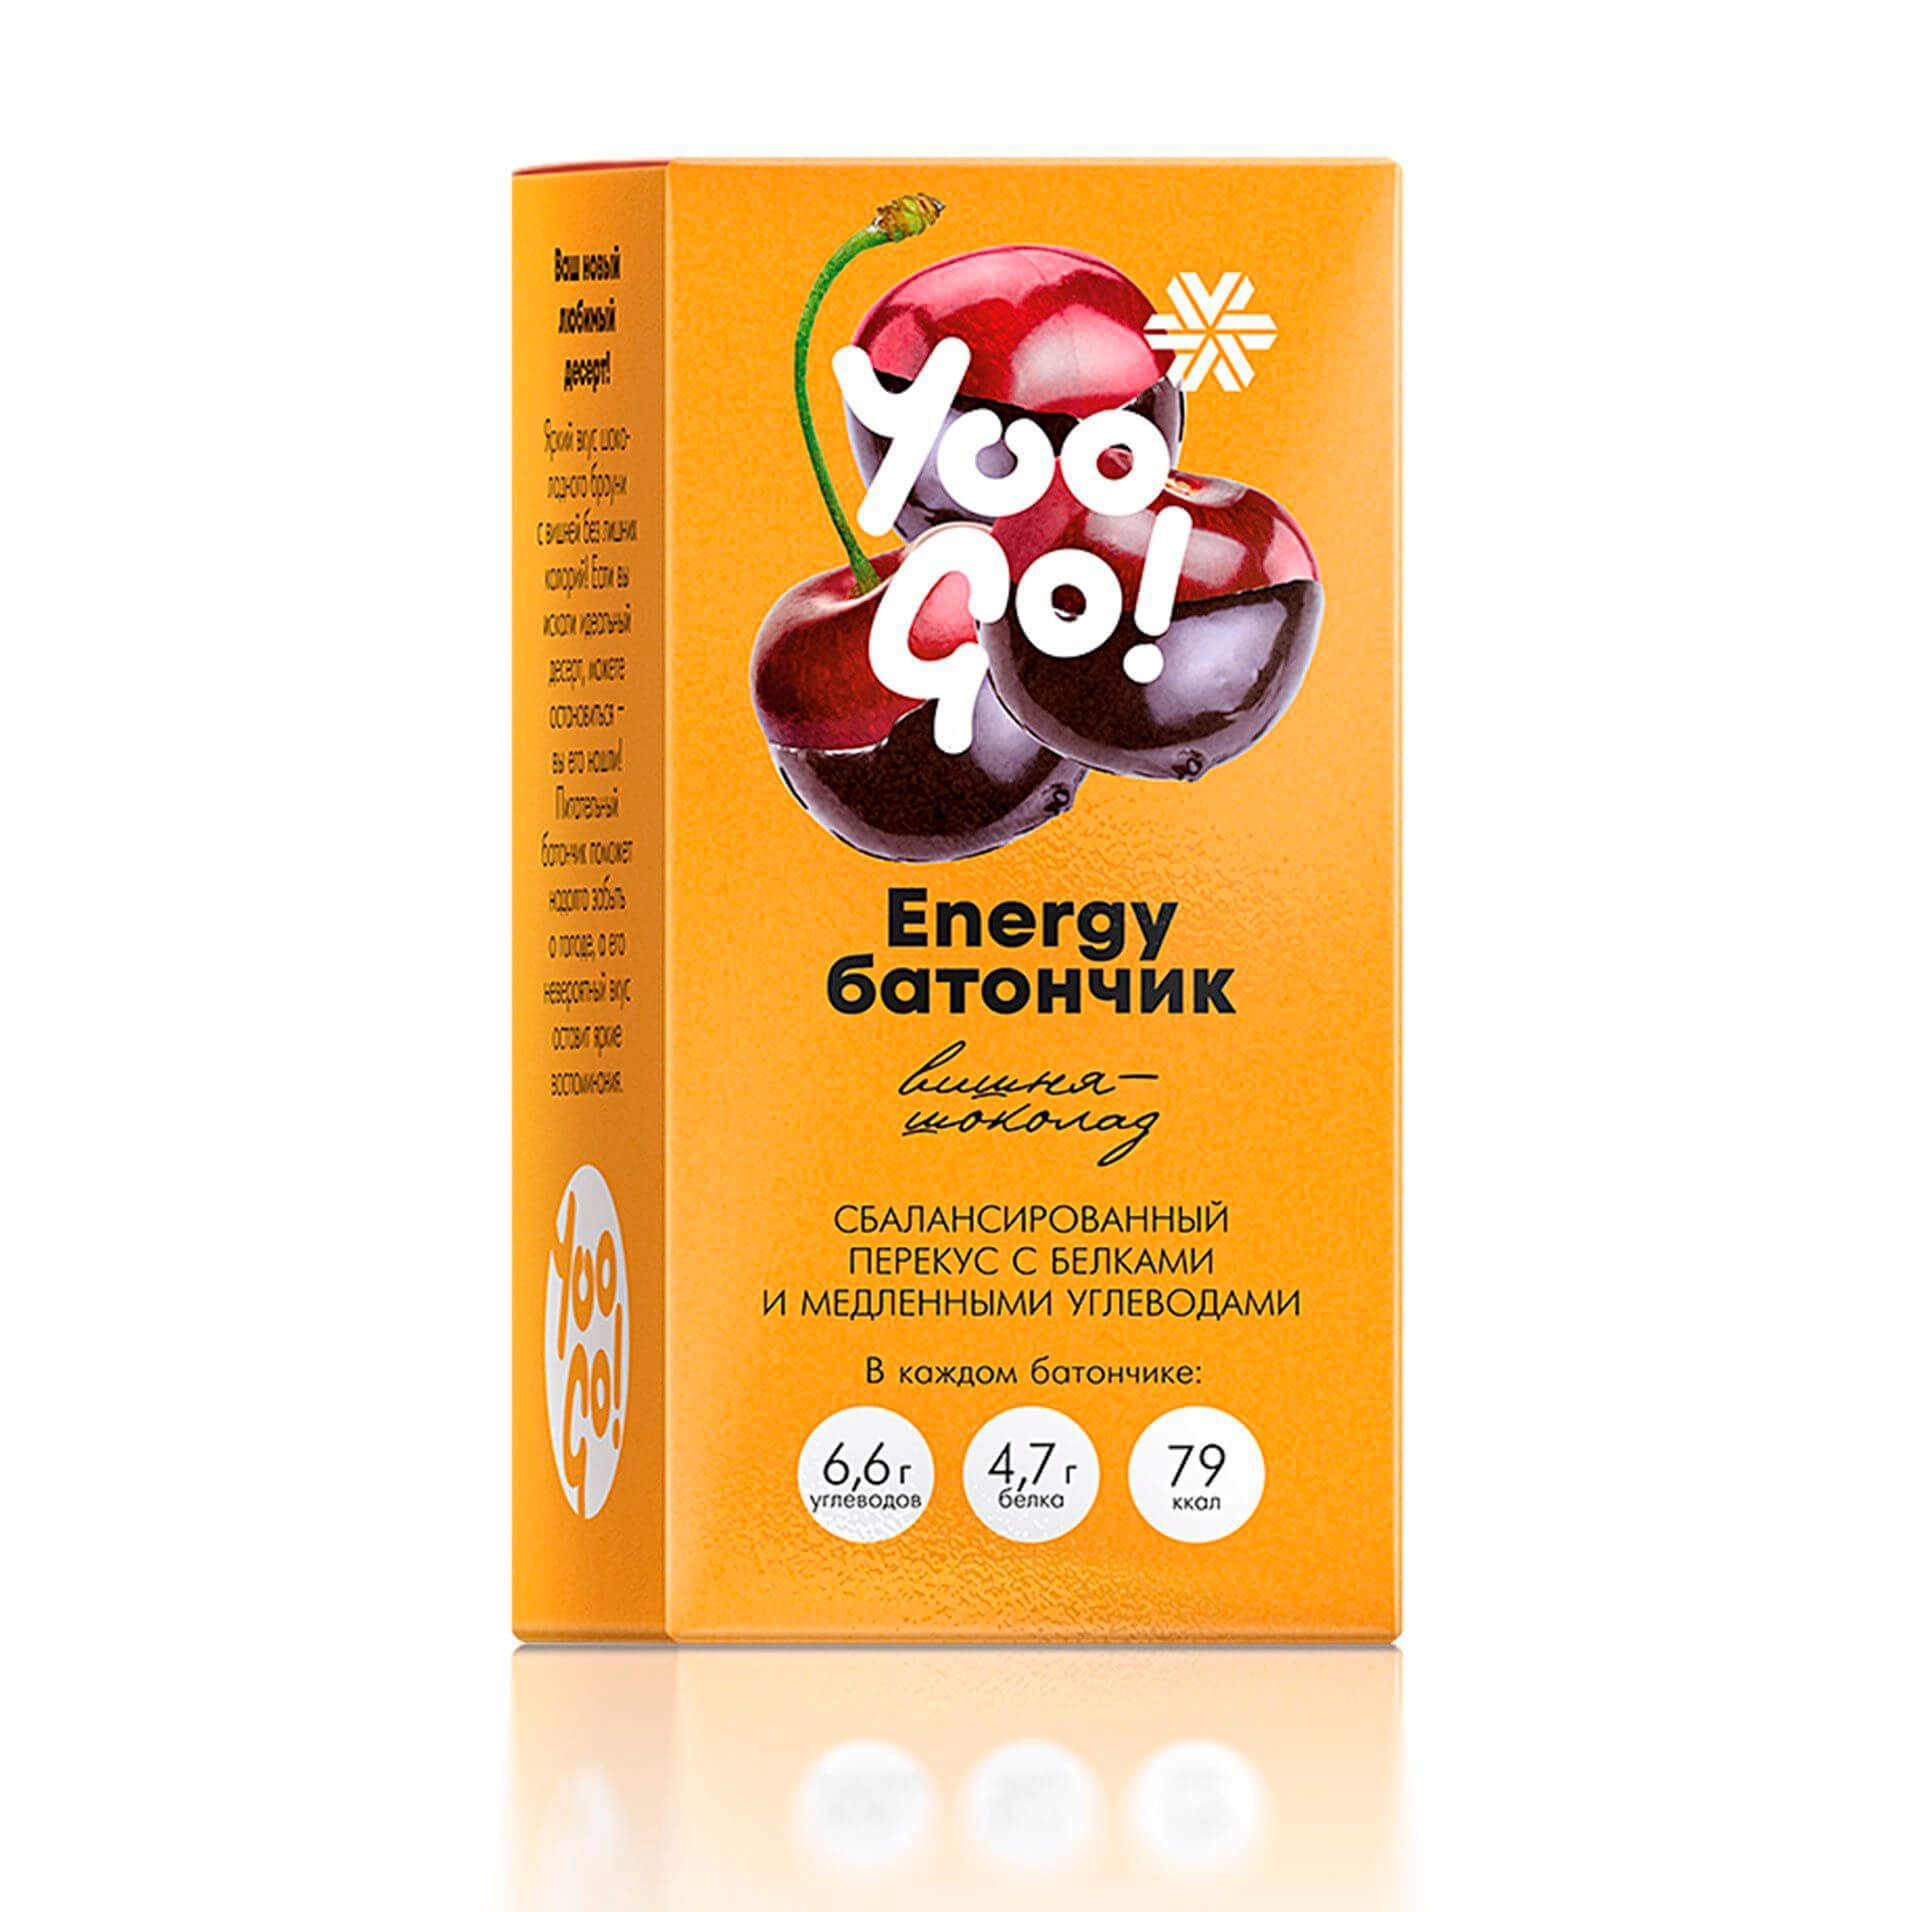 Energy-батончигі (шие-шоколад)